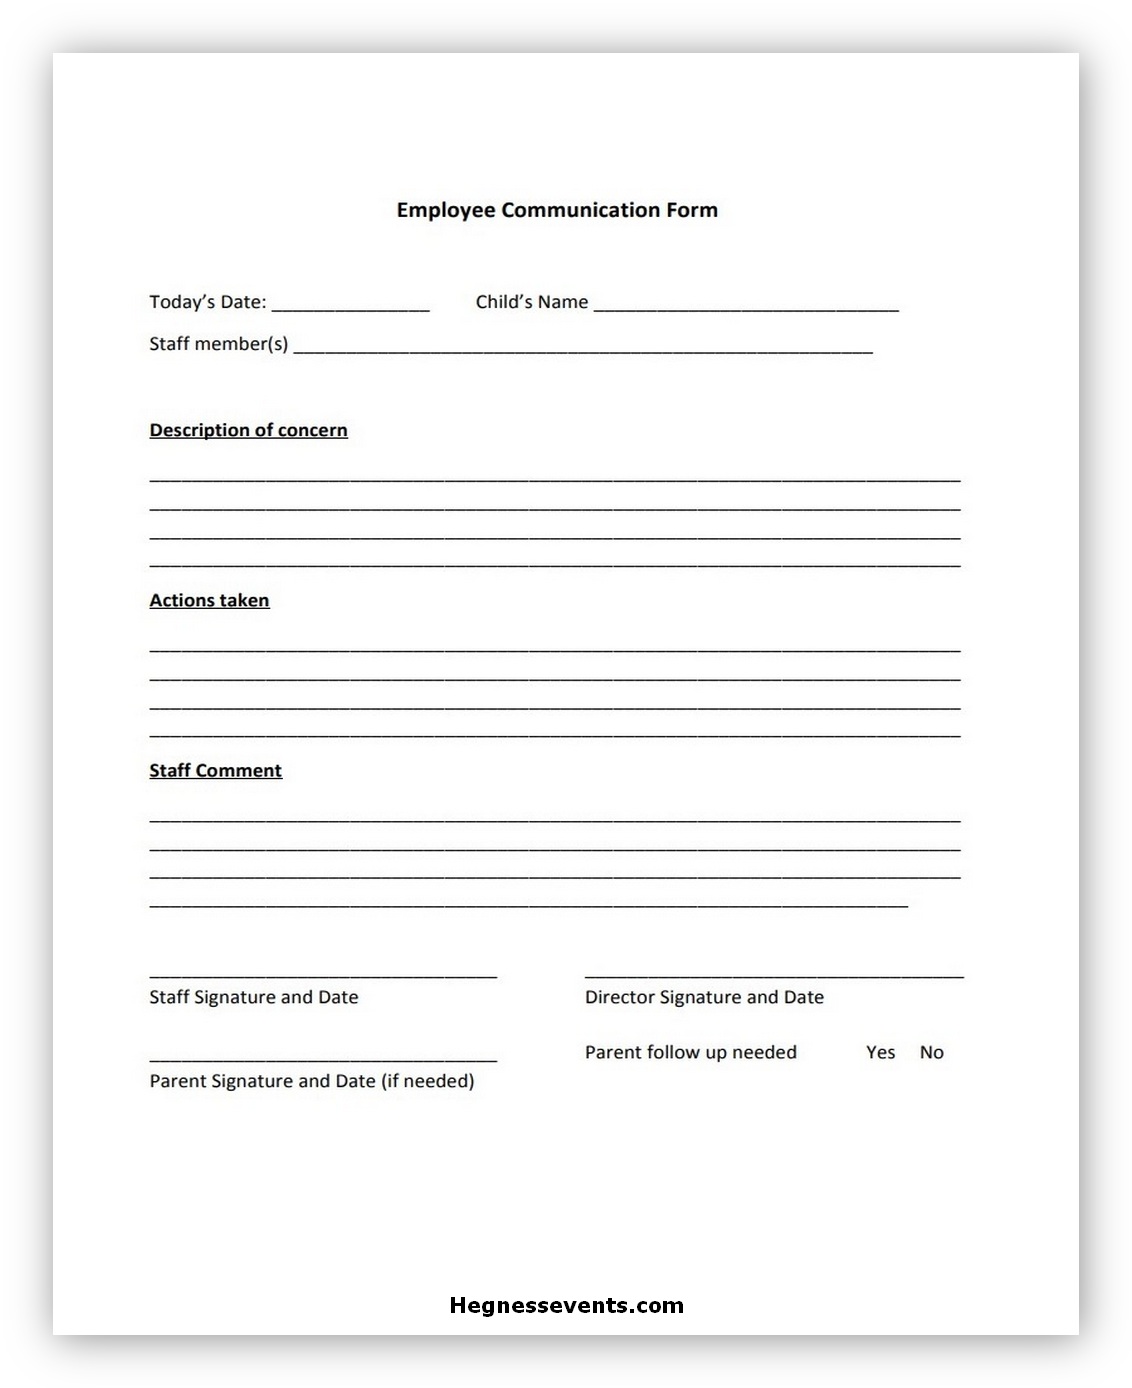 Employee Communication Form